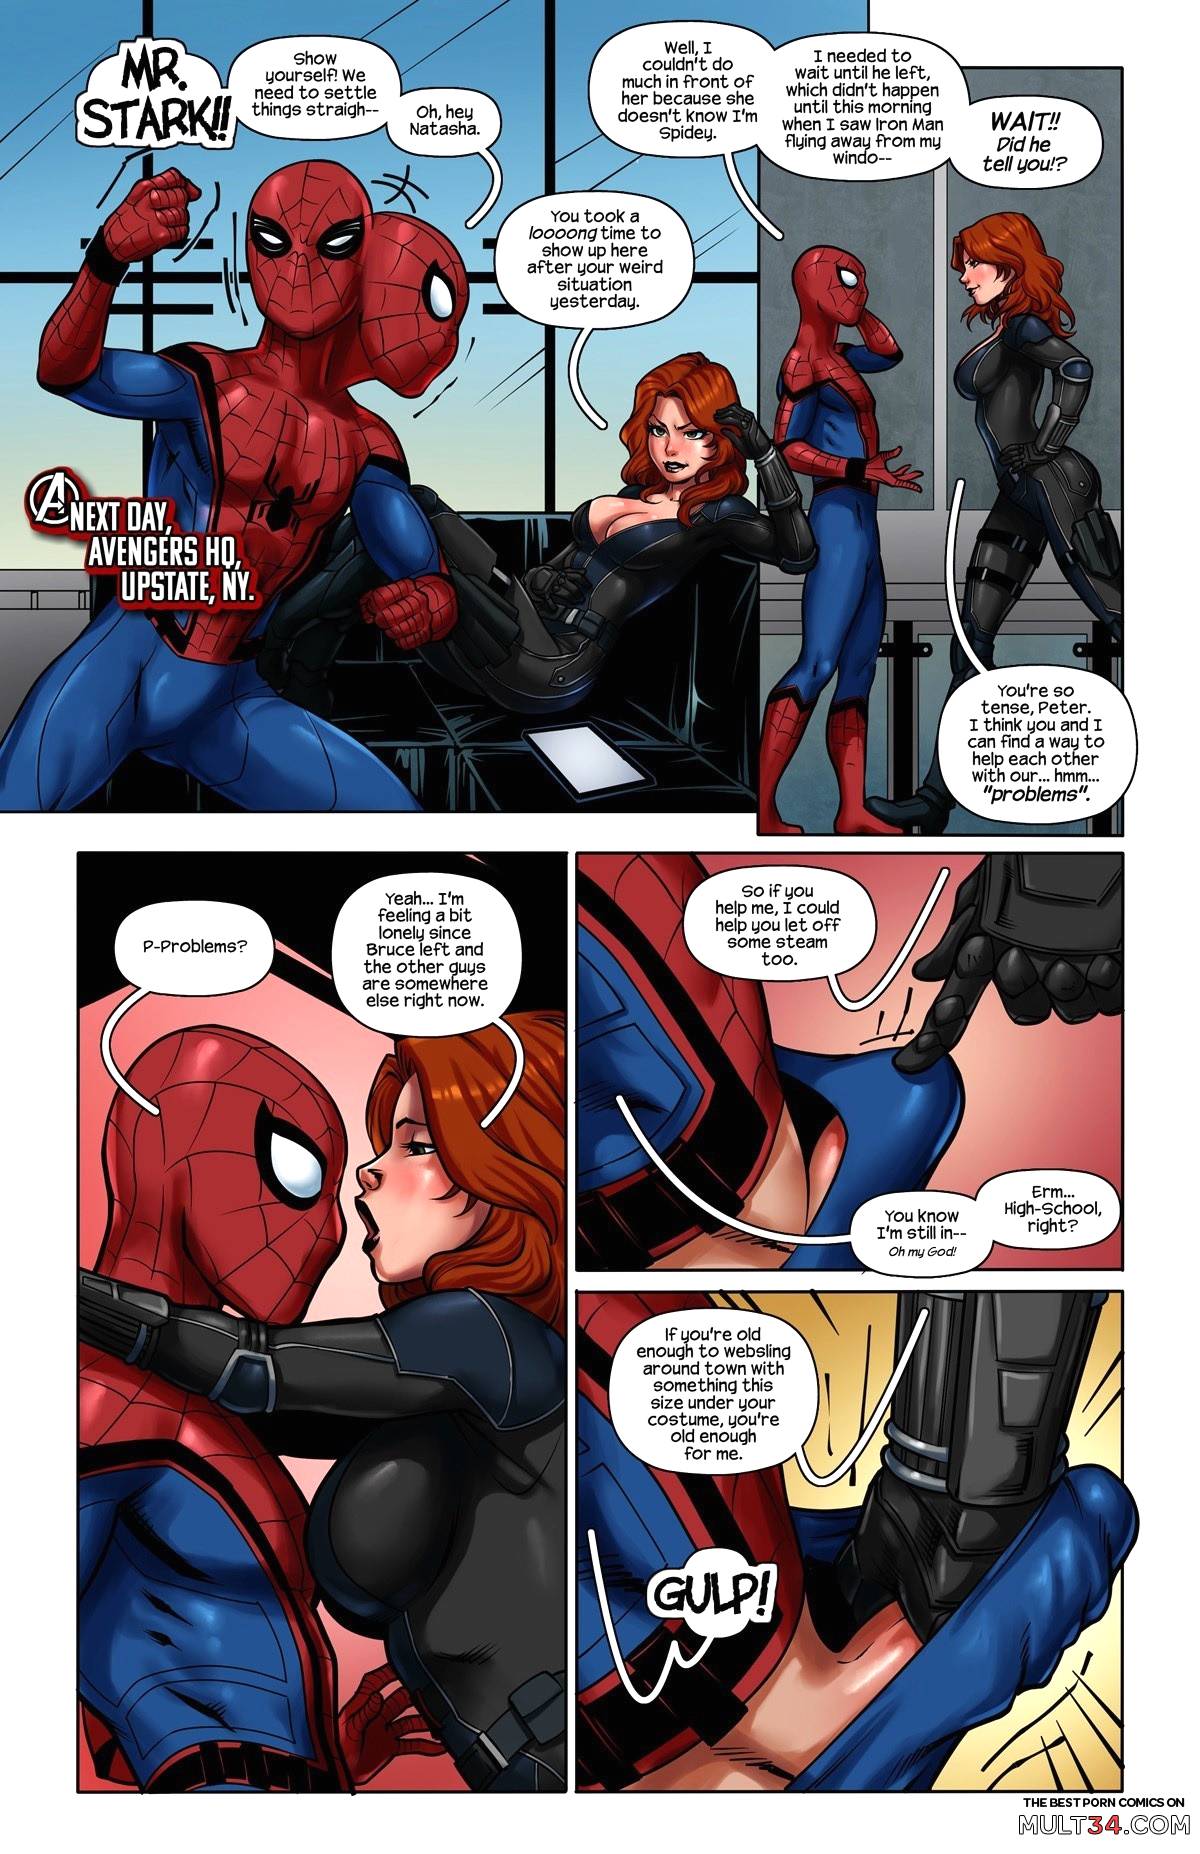 Rule 34 spider-man